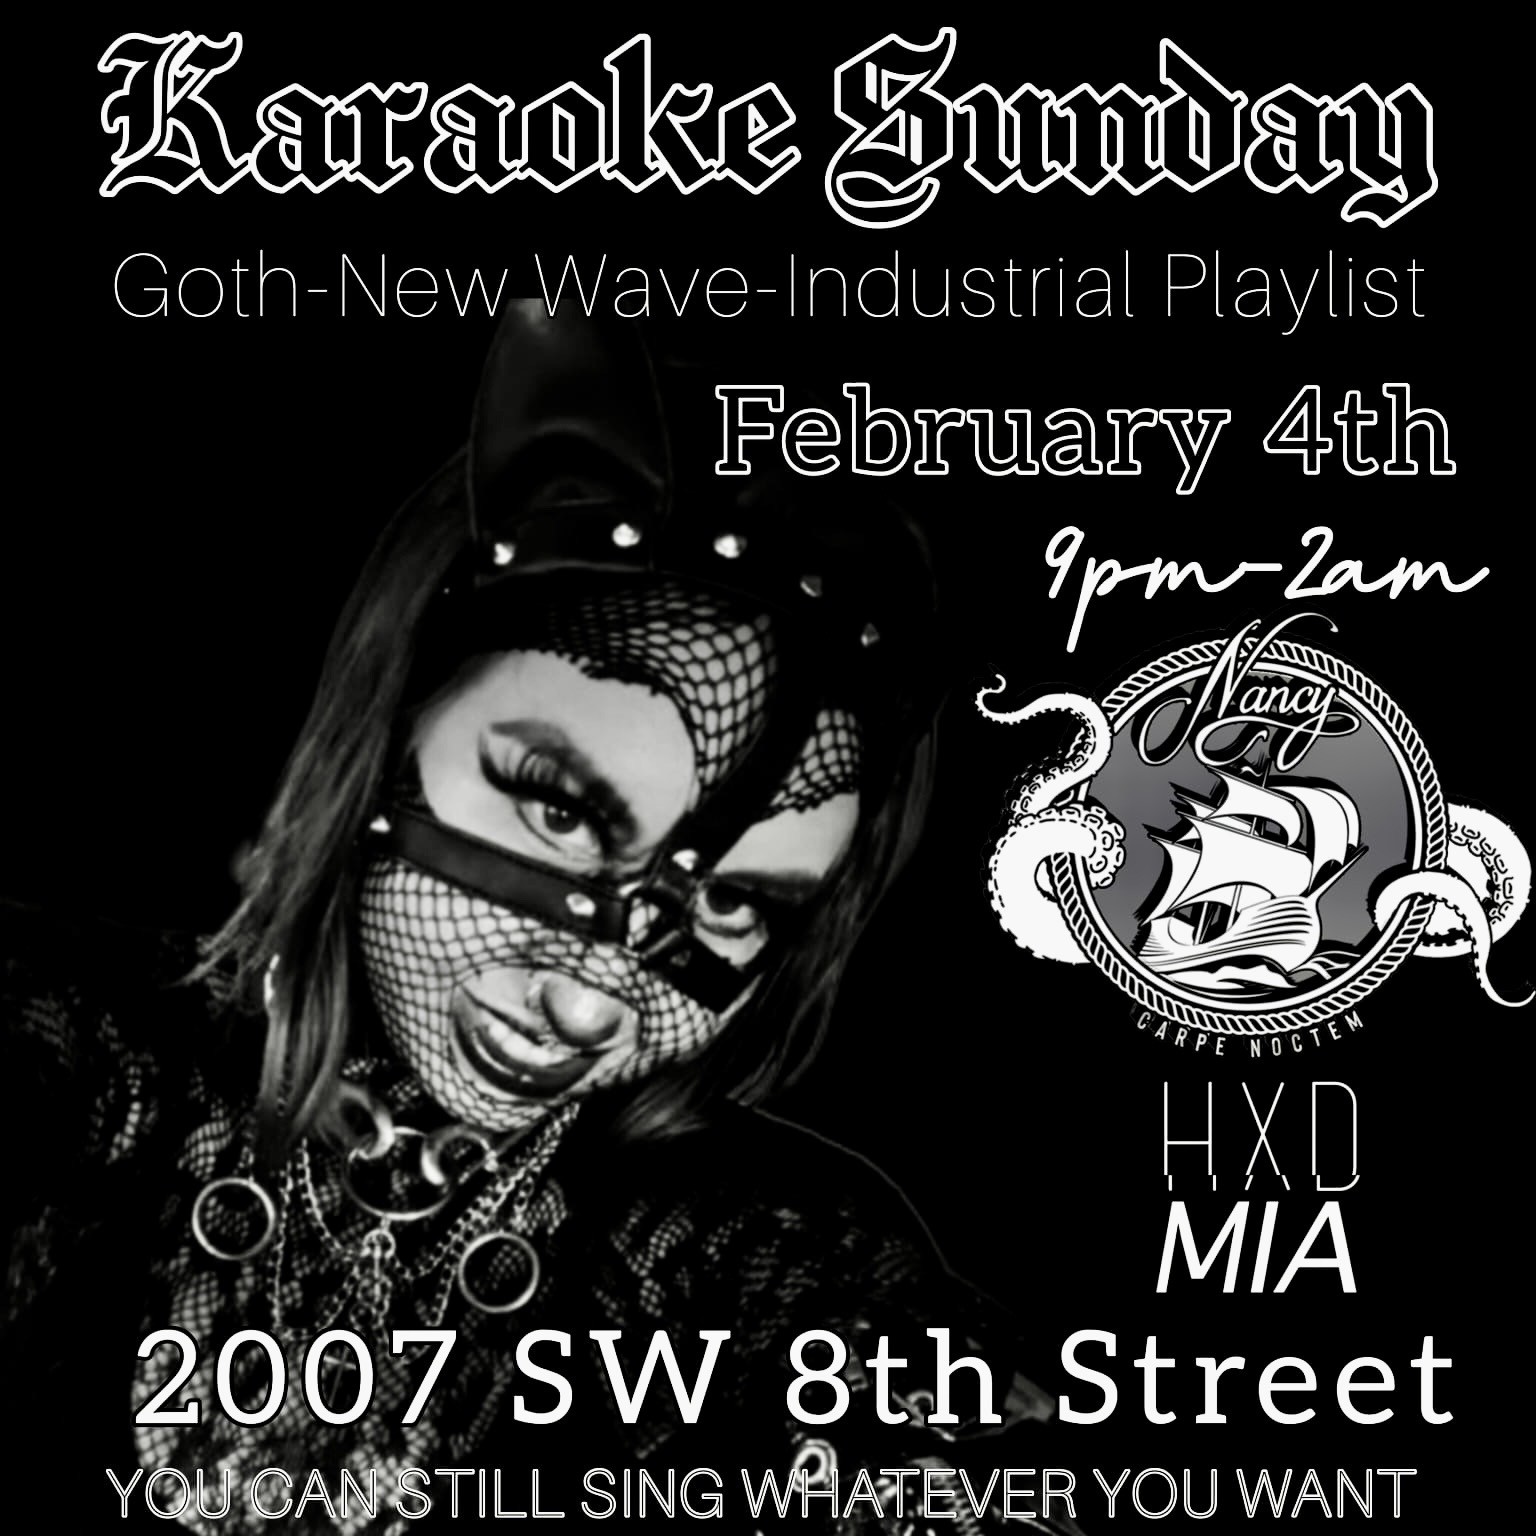 Karaoke Sunday - Goth-New Wave-Industrial Playlist at Bar Nancy